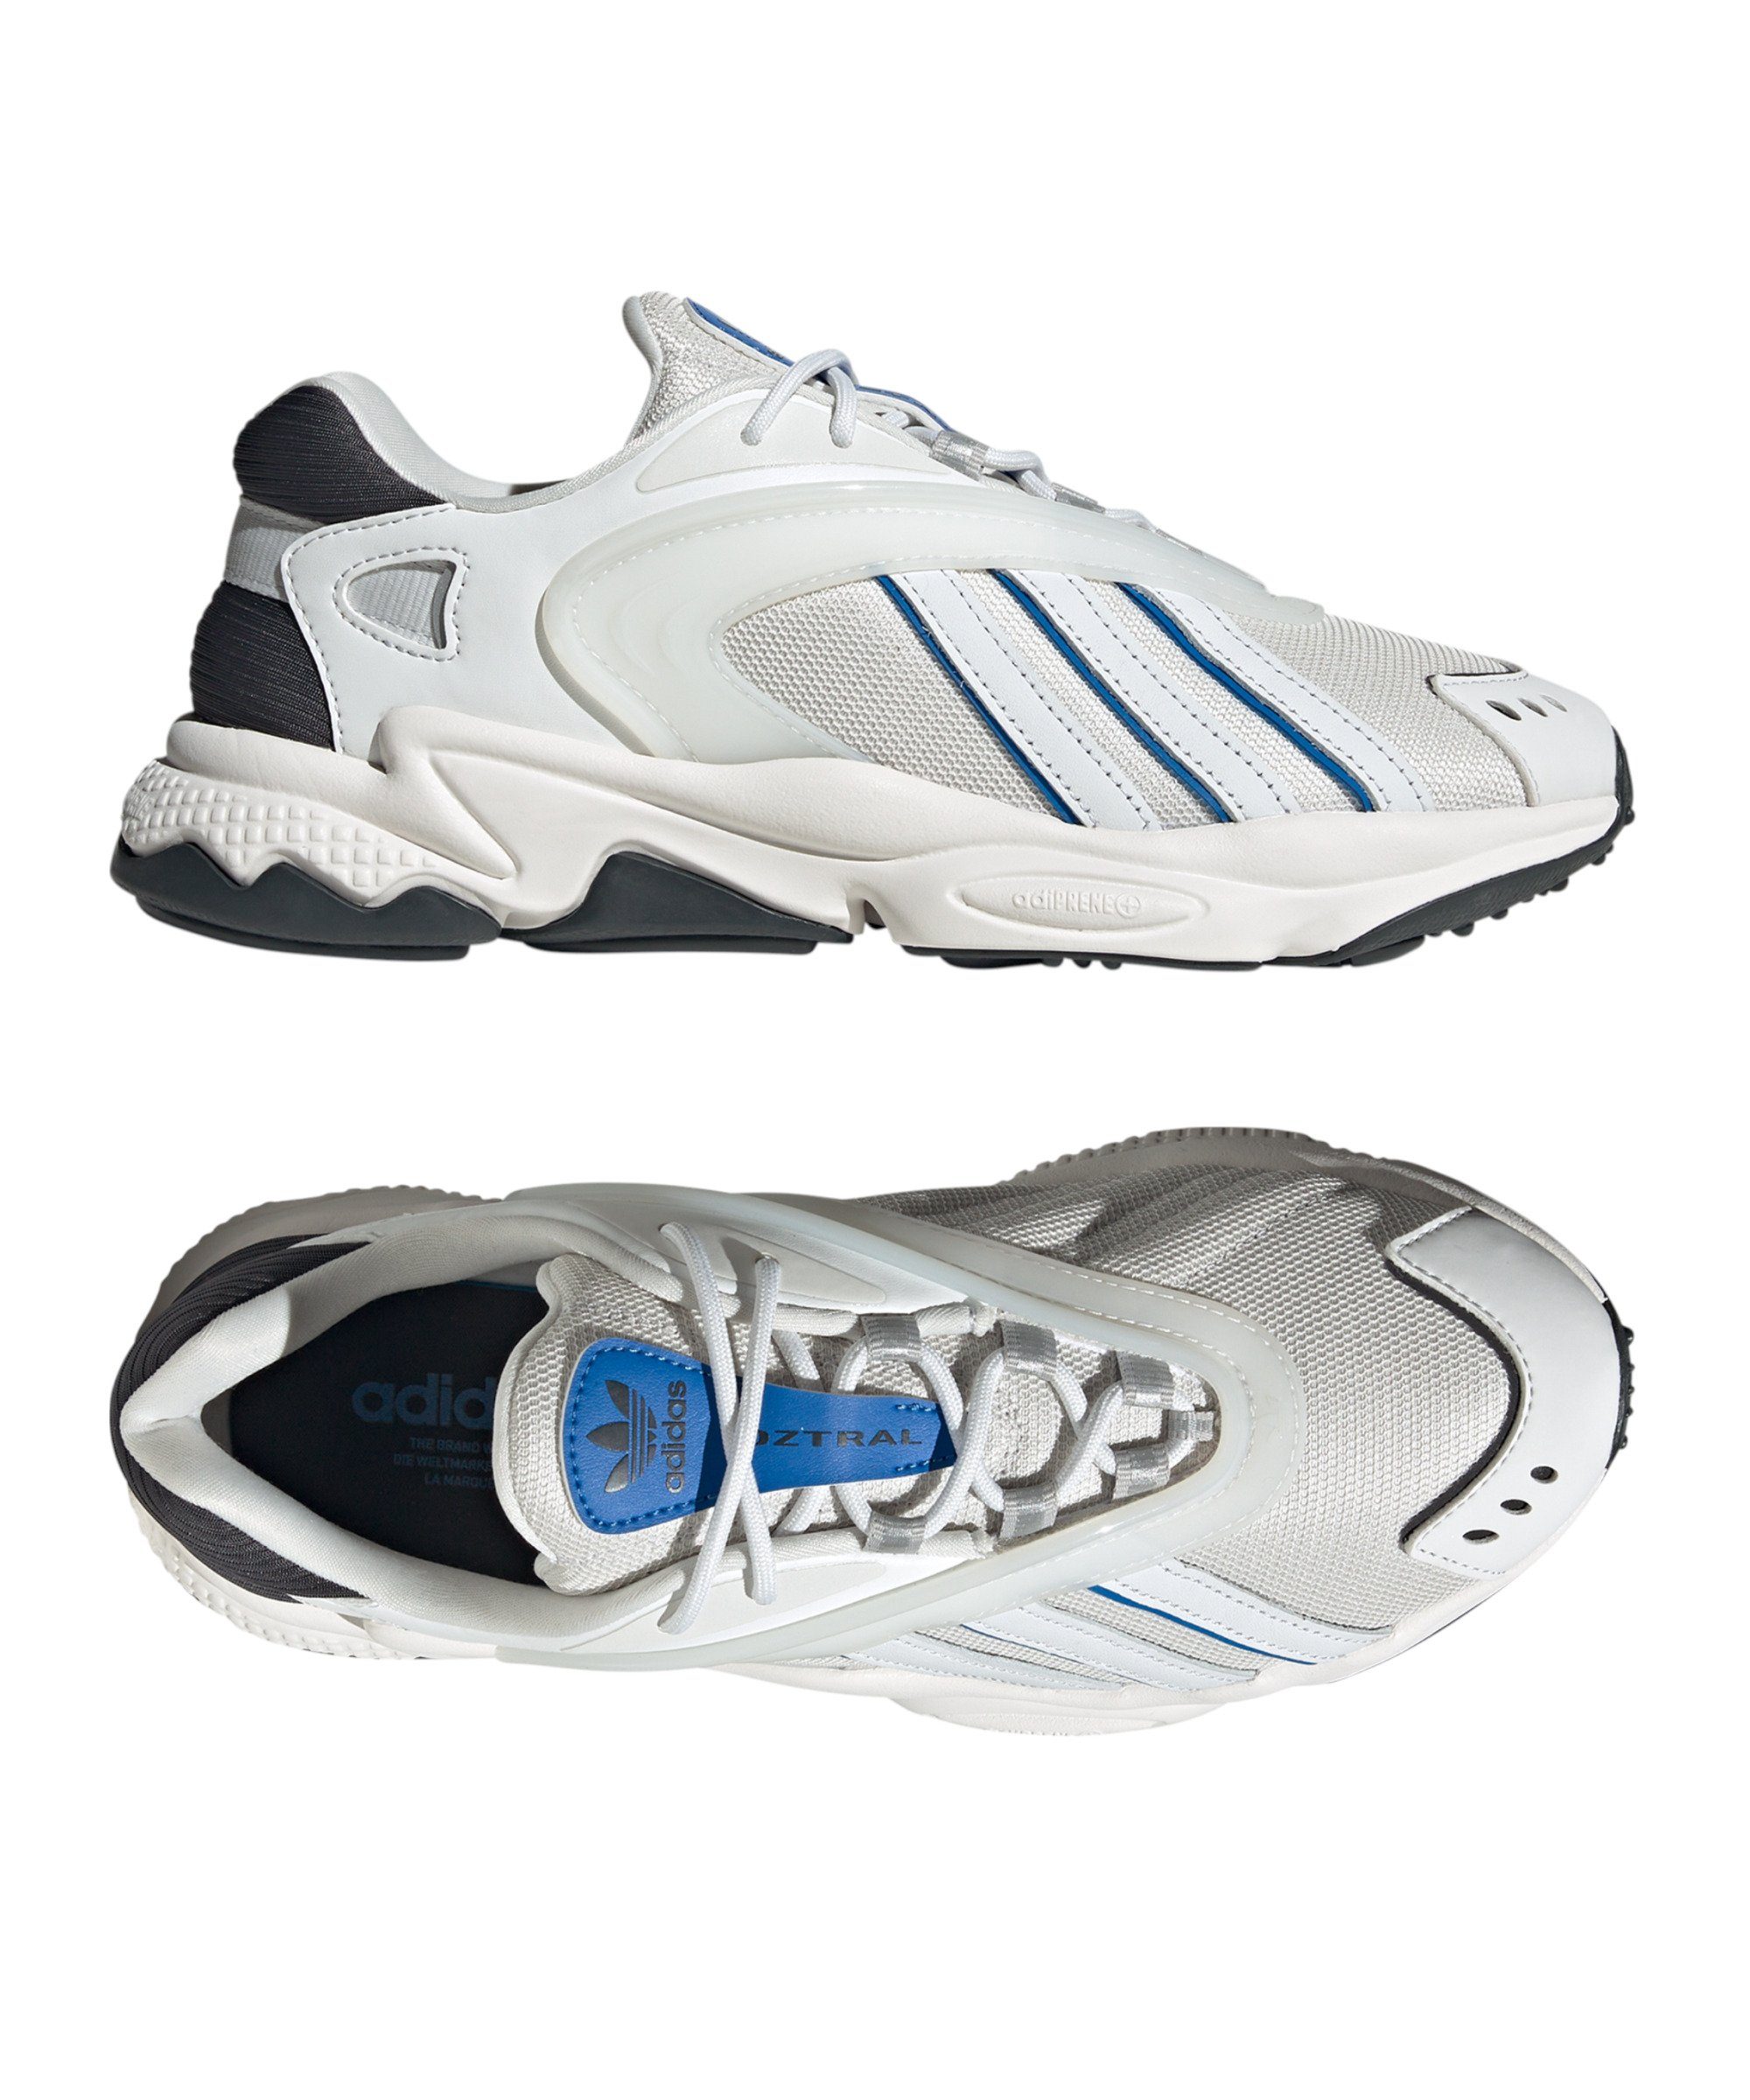 weissweissblau Originals Oztral Sneaker adidas